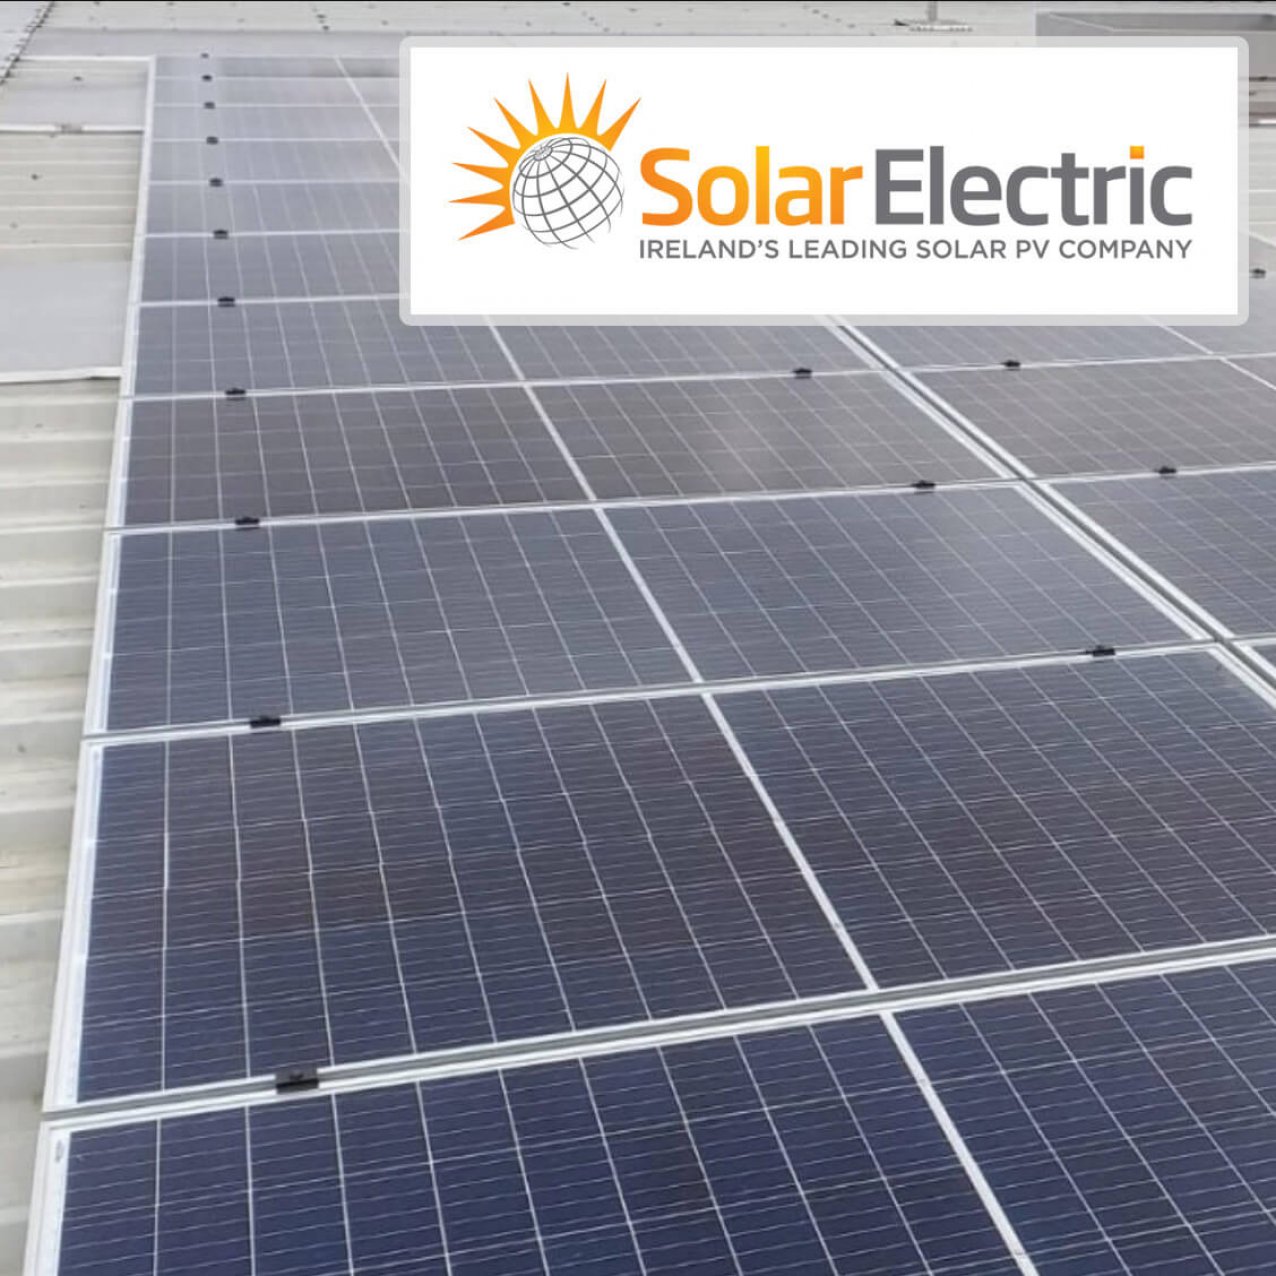 Solar panels with Solar Electric logo